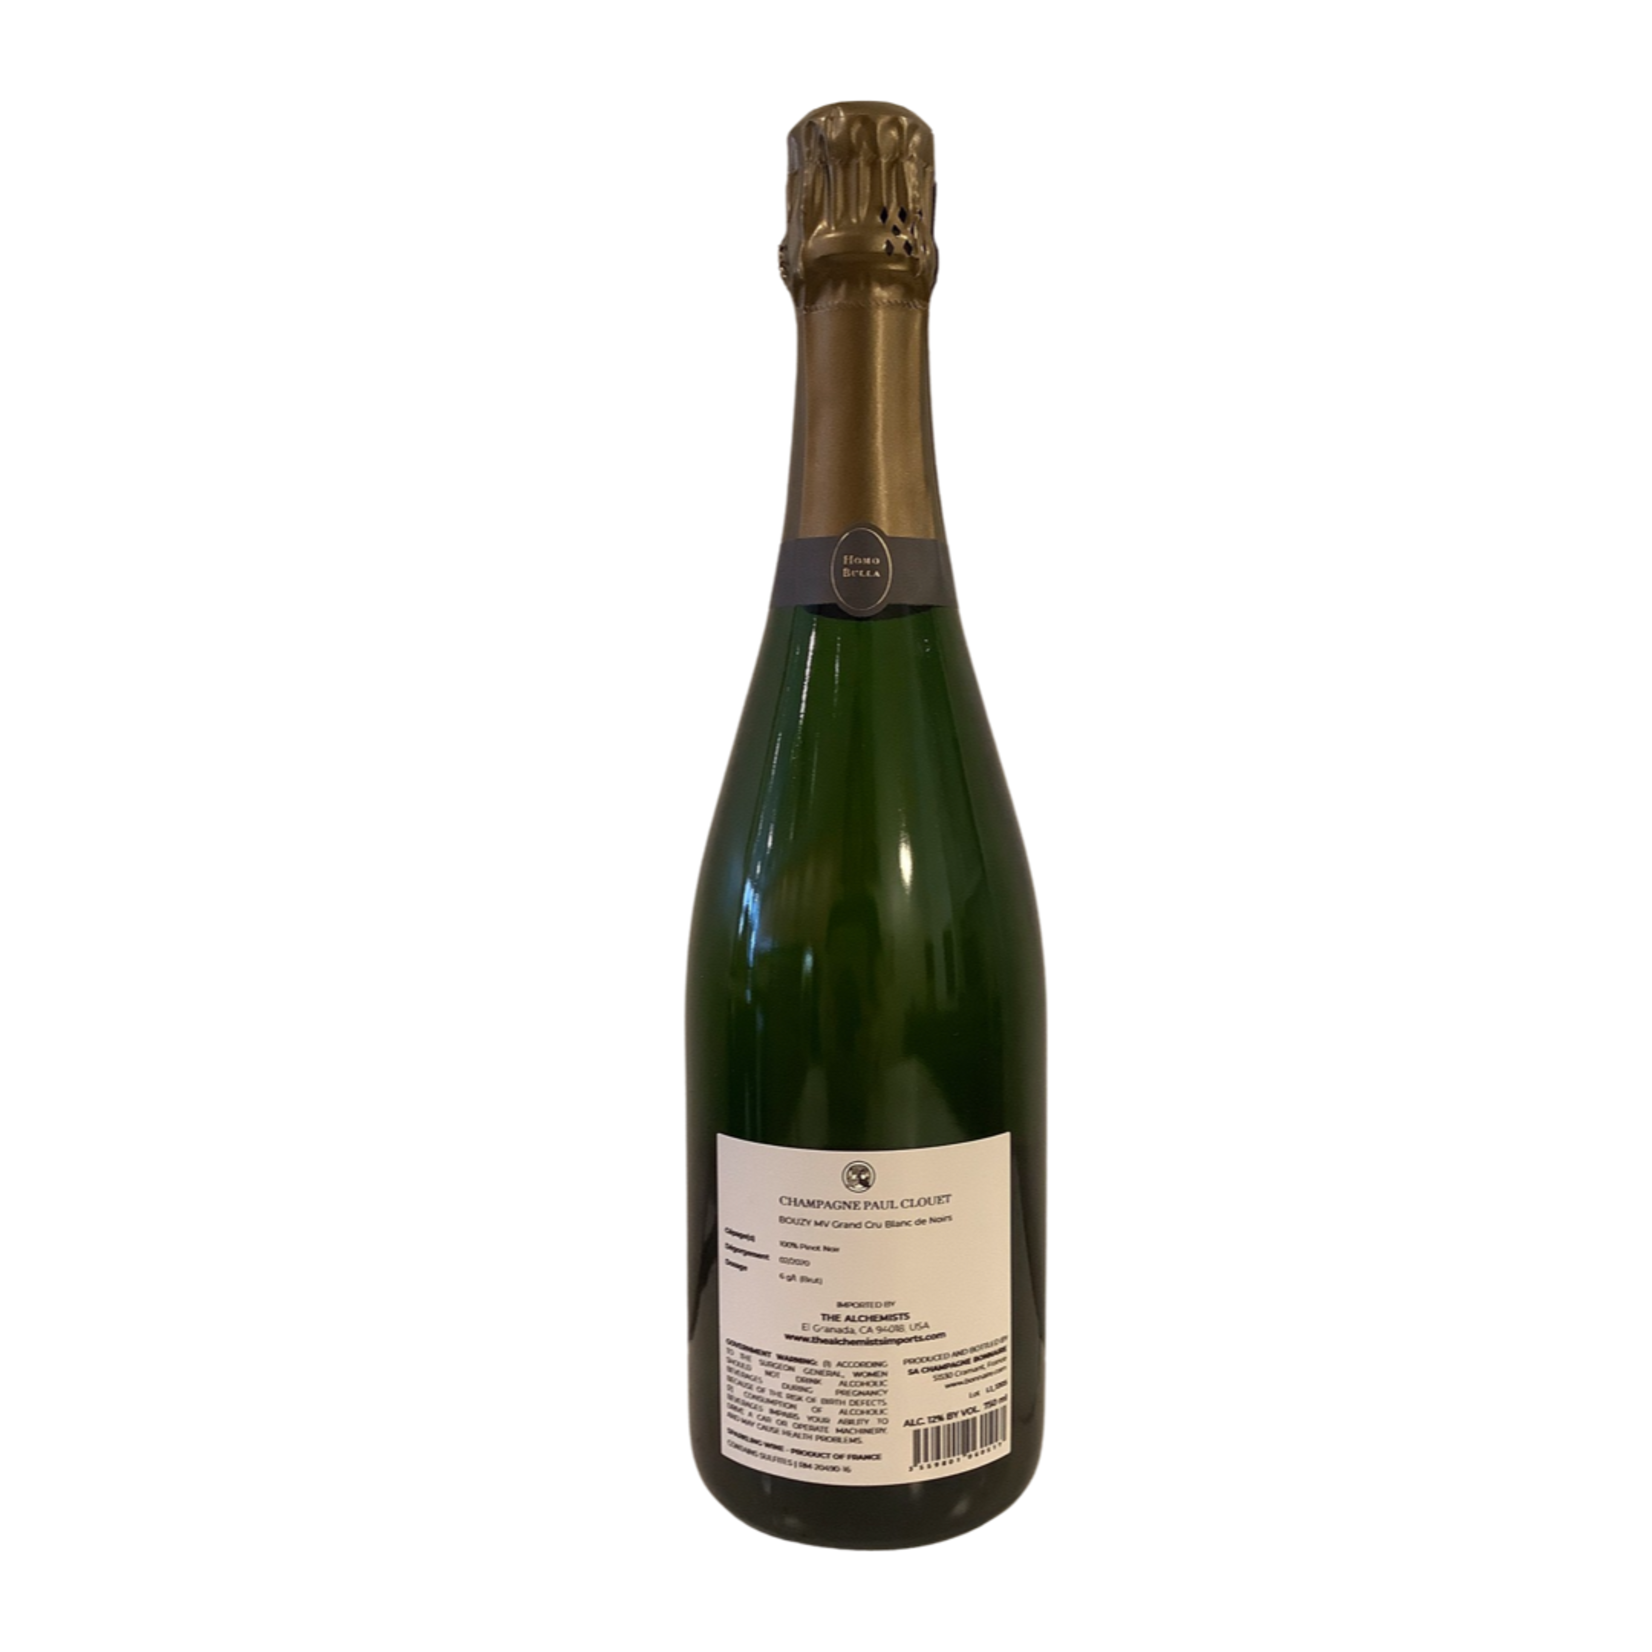 NV Paul Clouet 'Grand Cru Blanc de Noirs" Champagne, Bouzy | France